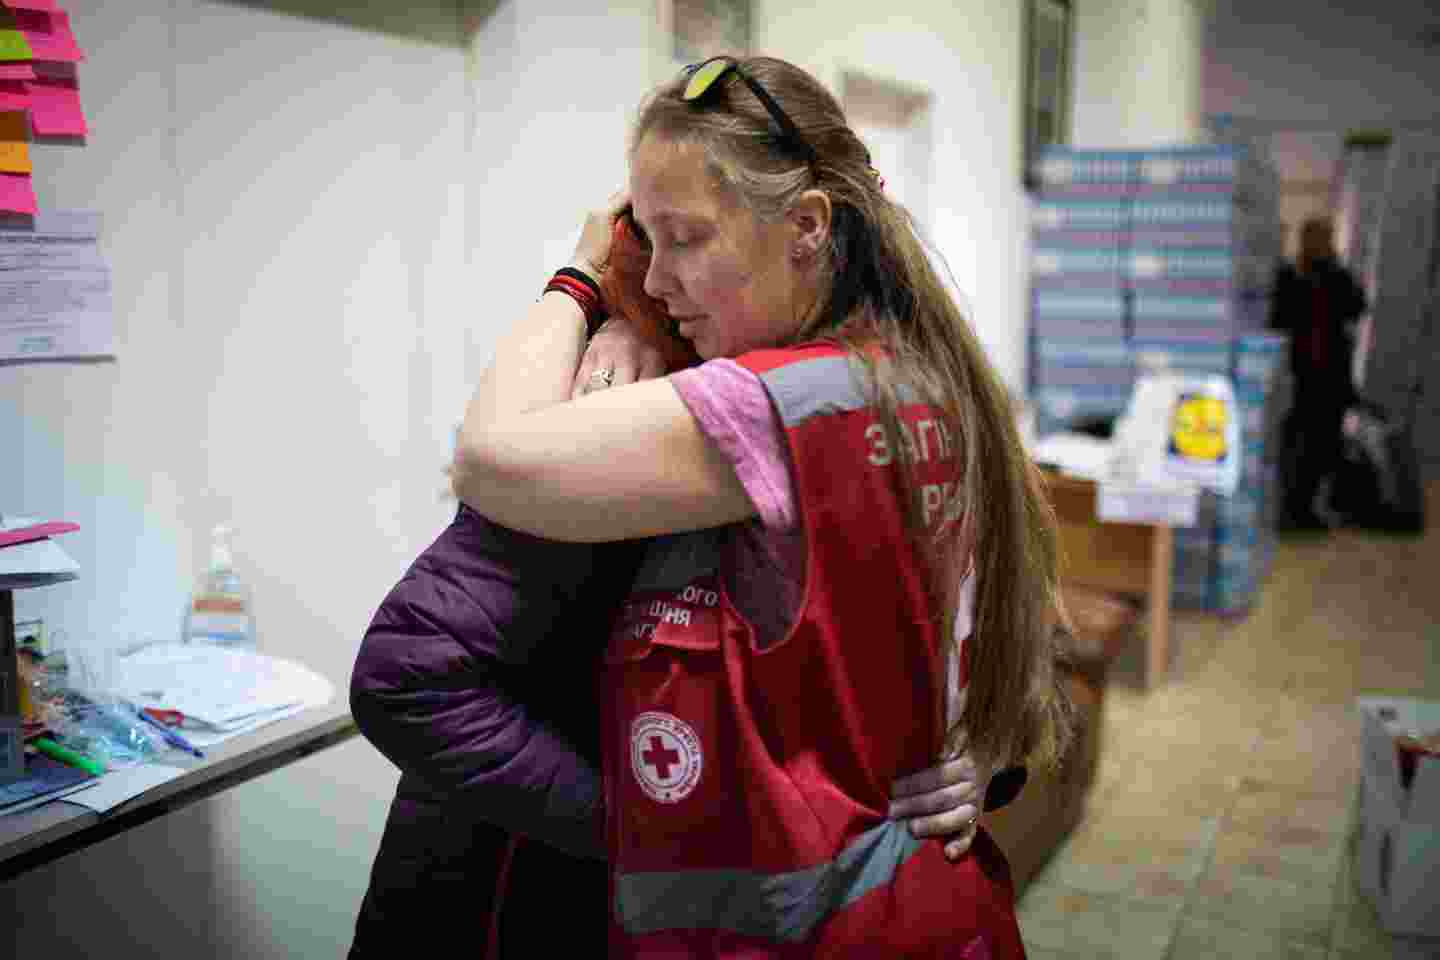 A Red Cross volunteer hugging someone.